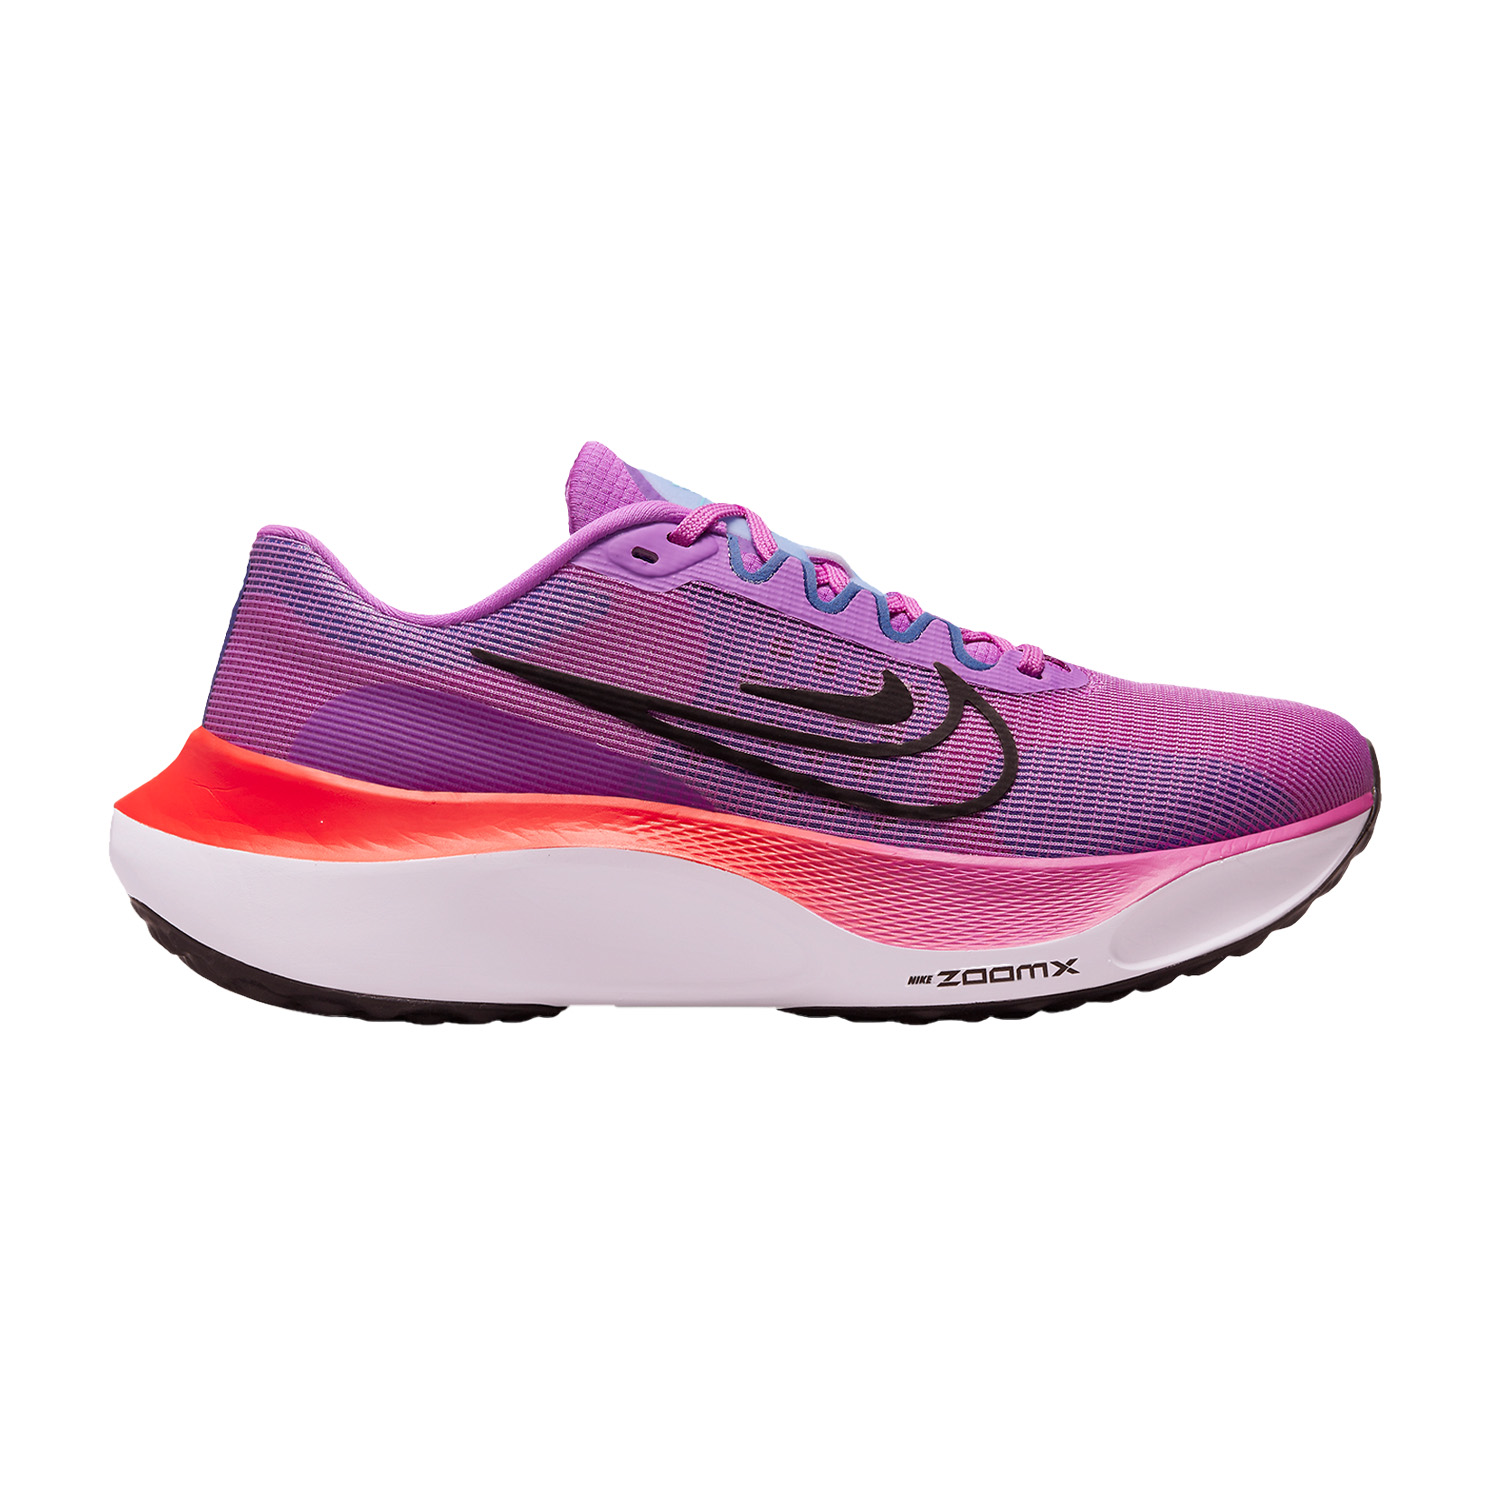 Nike Zoom Fly 5 Women's Running Shoes - Hyper Pink/Black